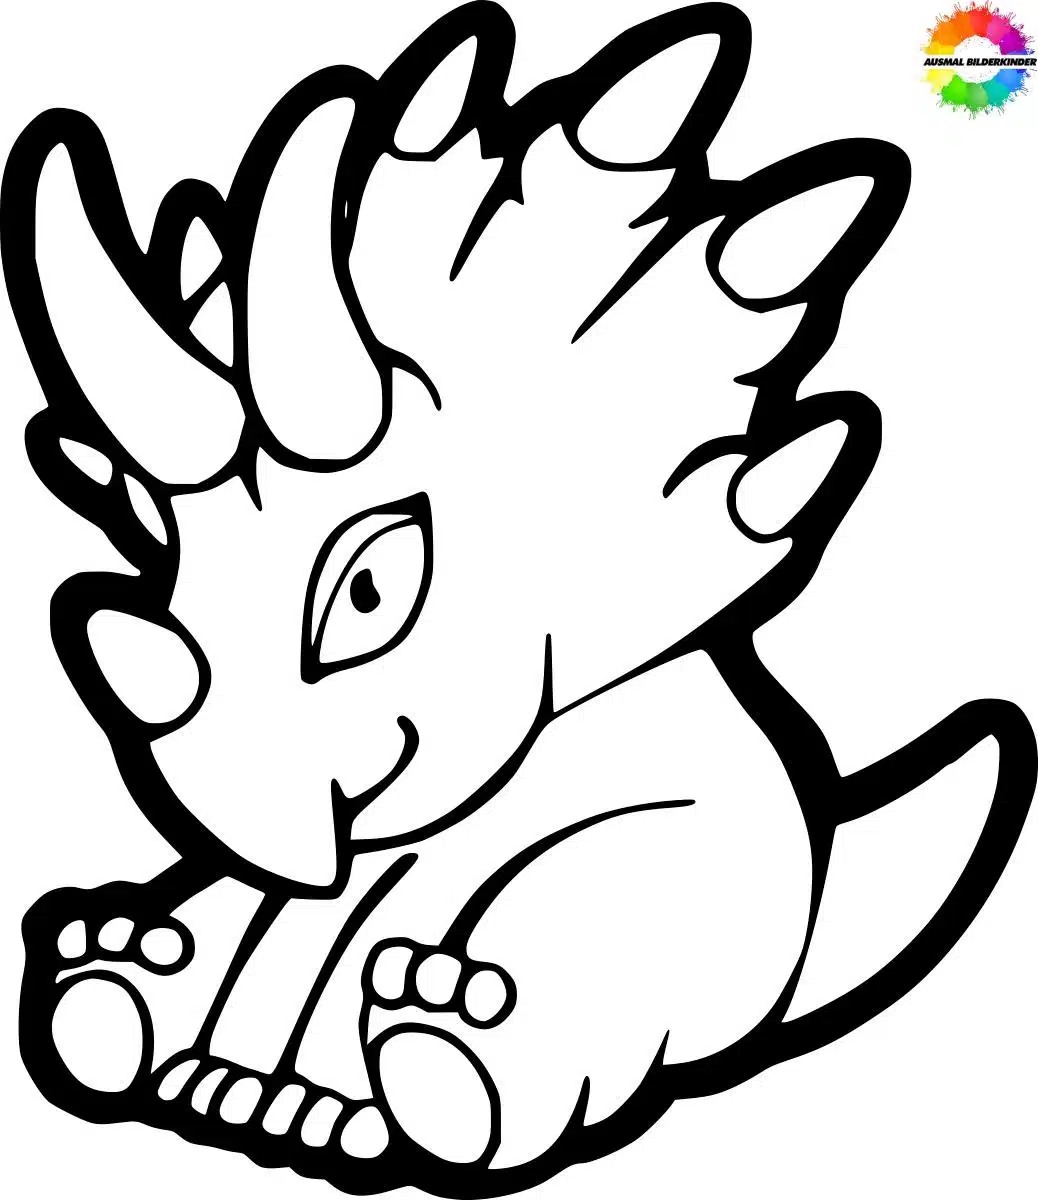 Triceratops 11